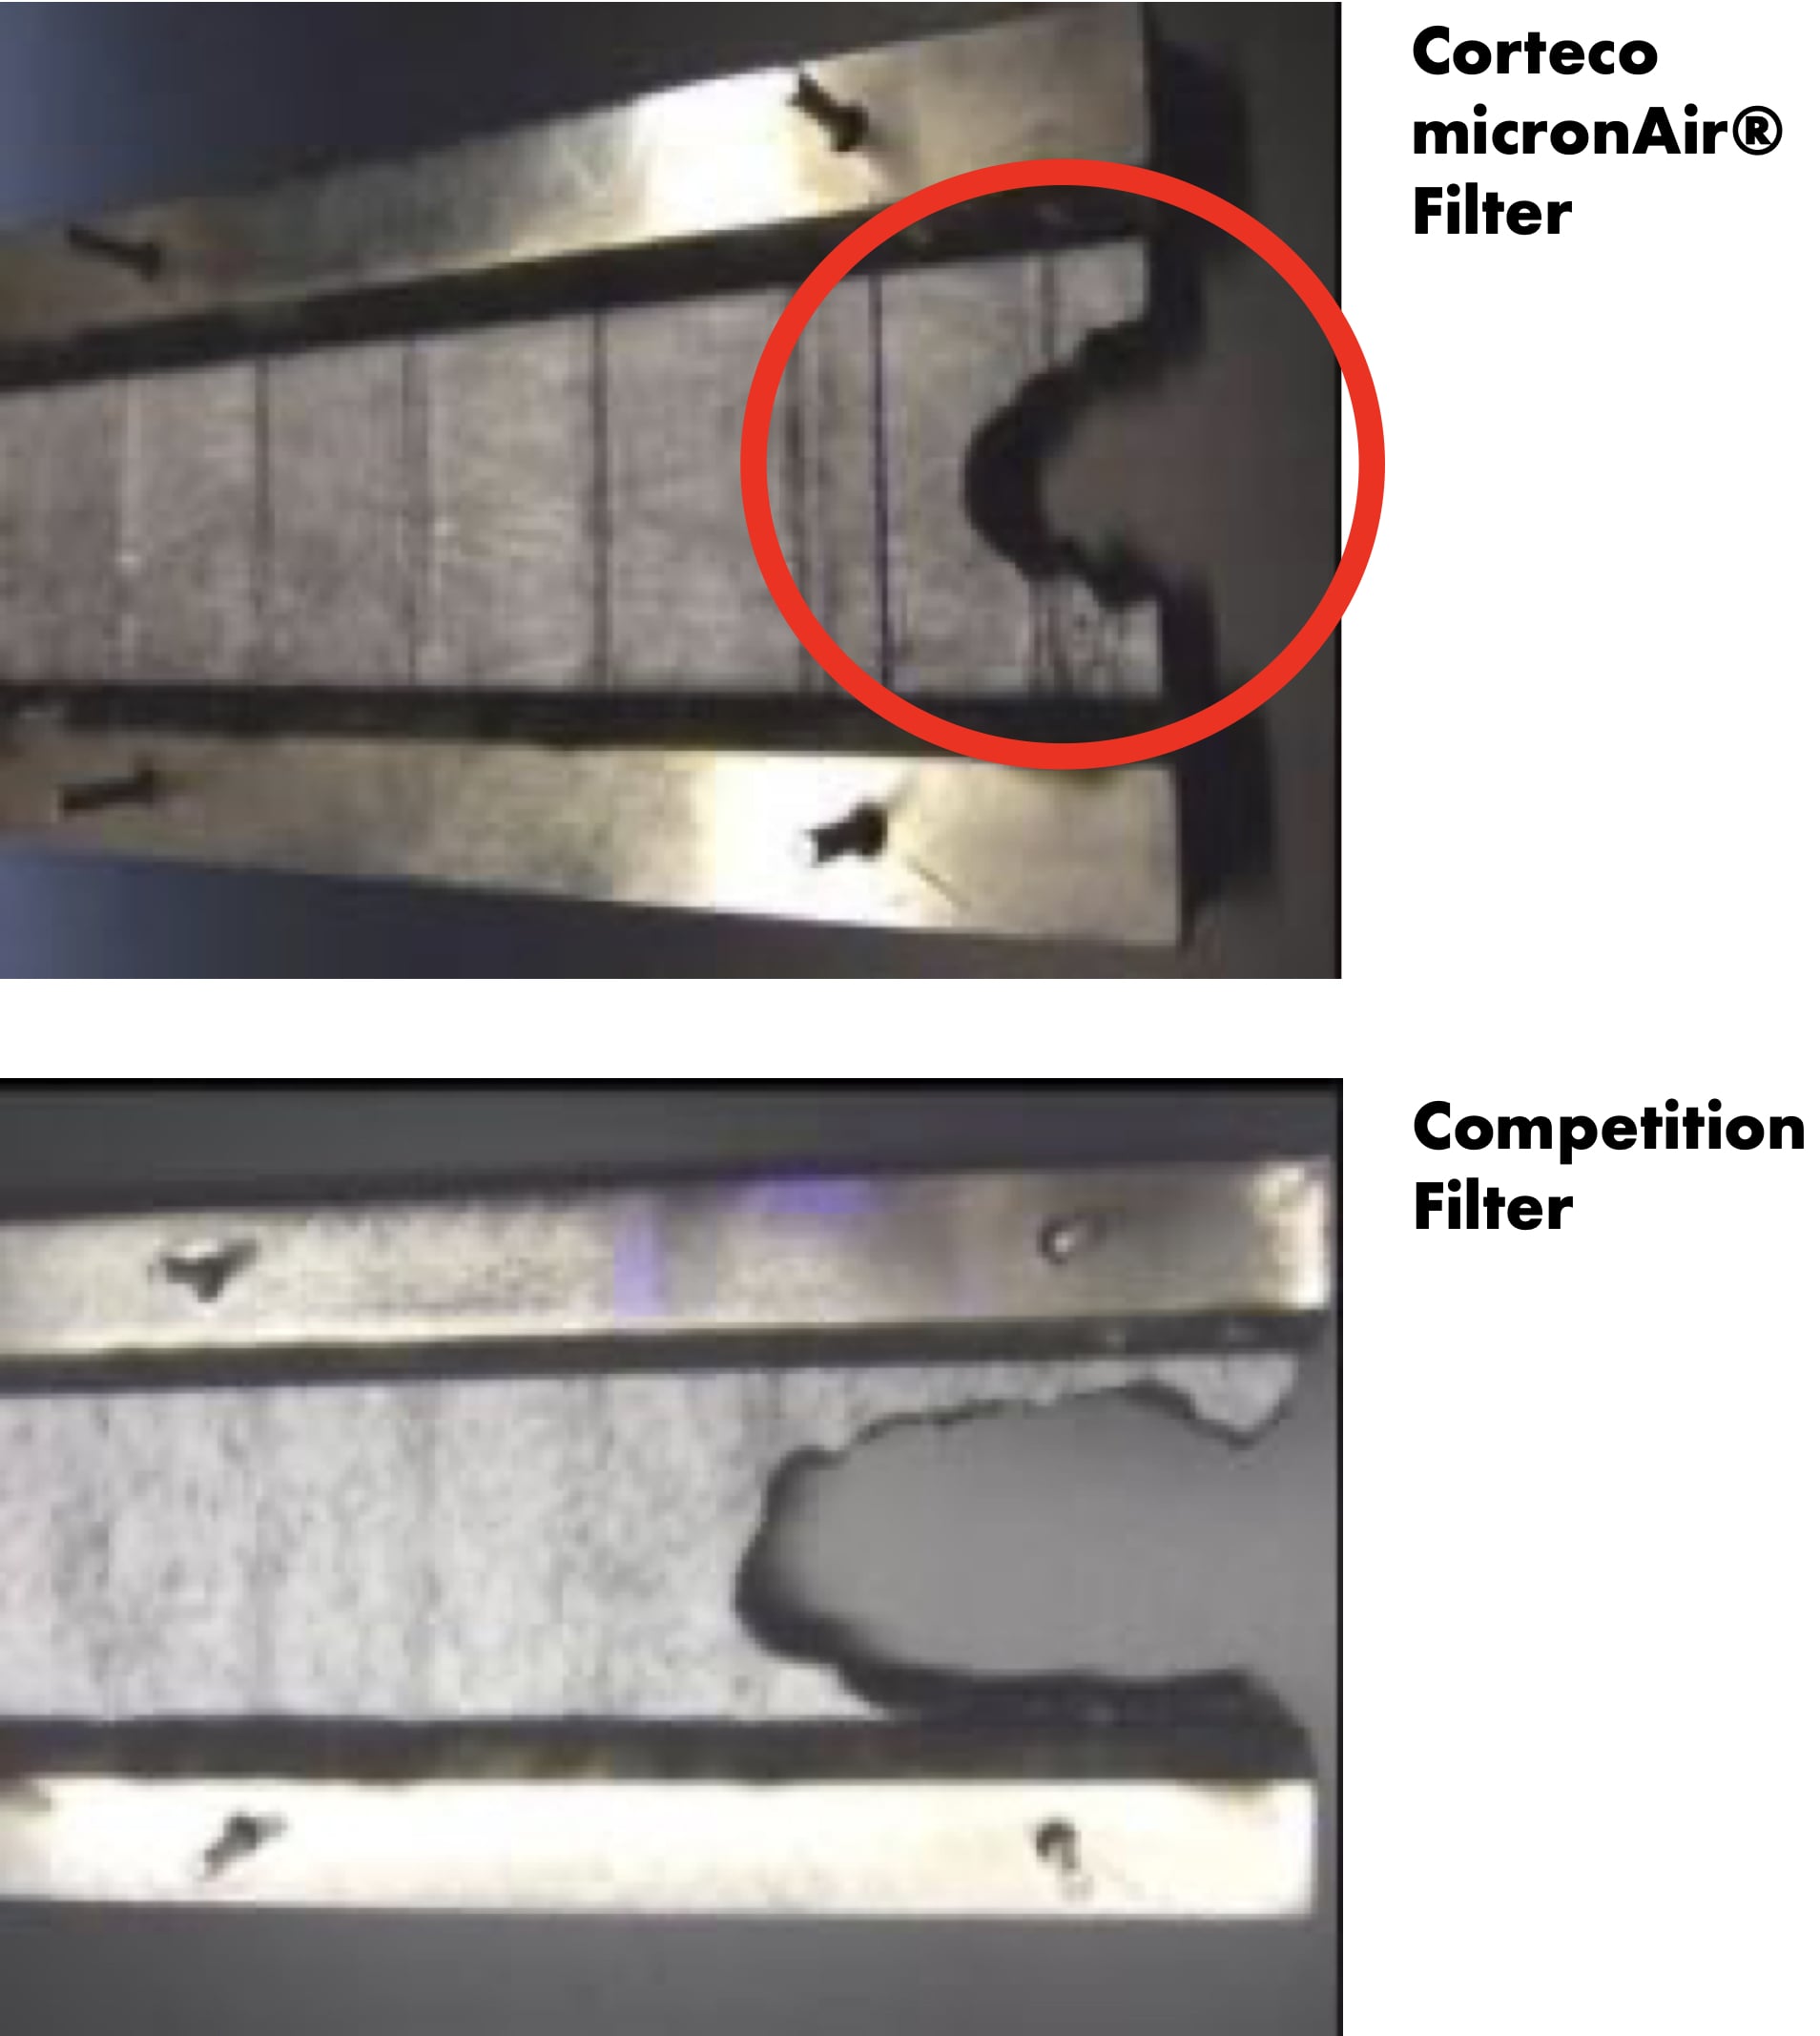 Corteco cabin air filters vs. competition